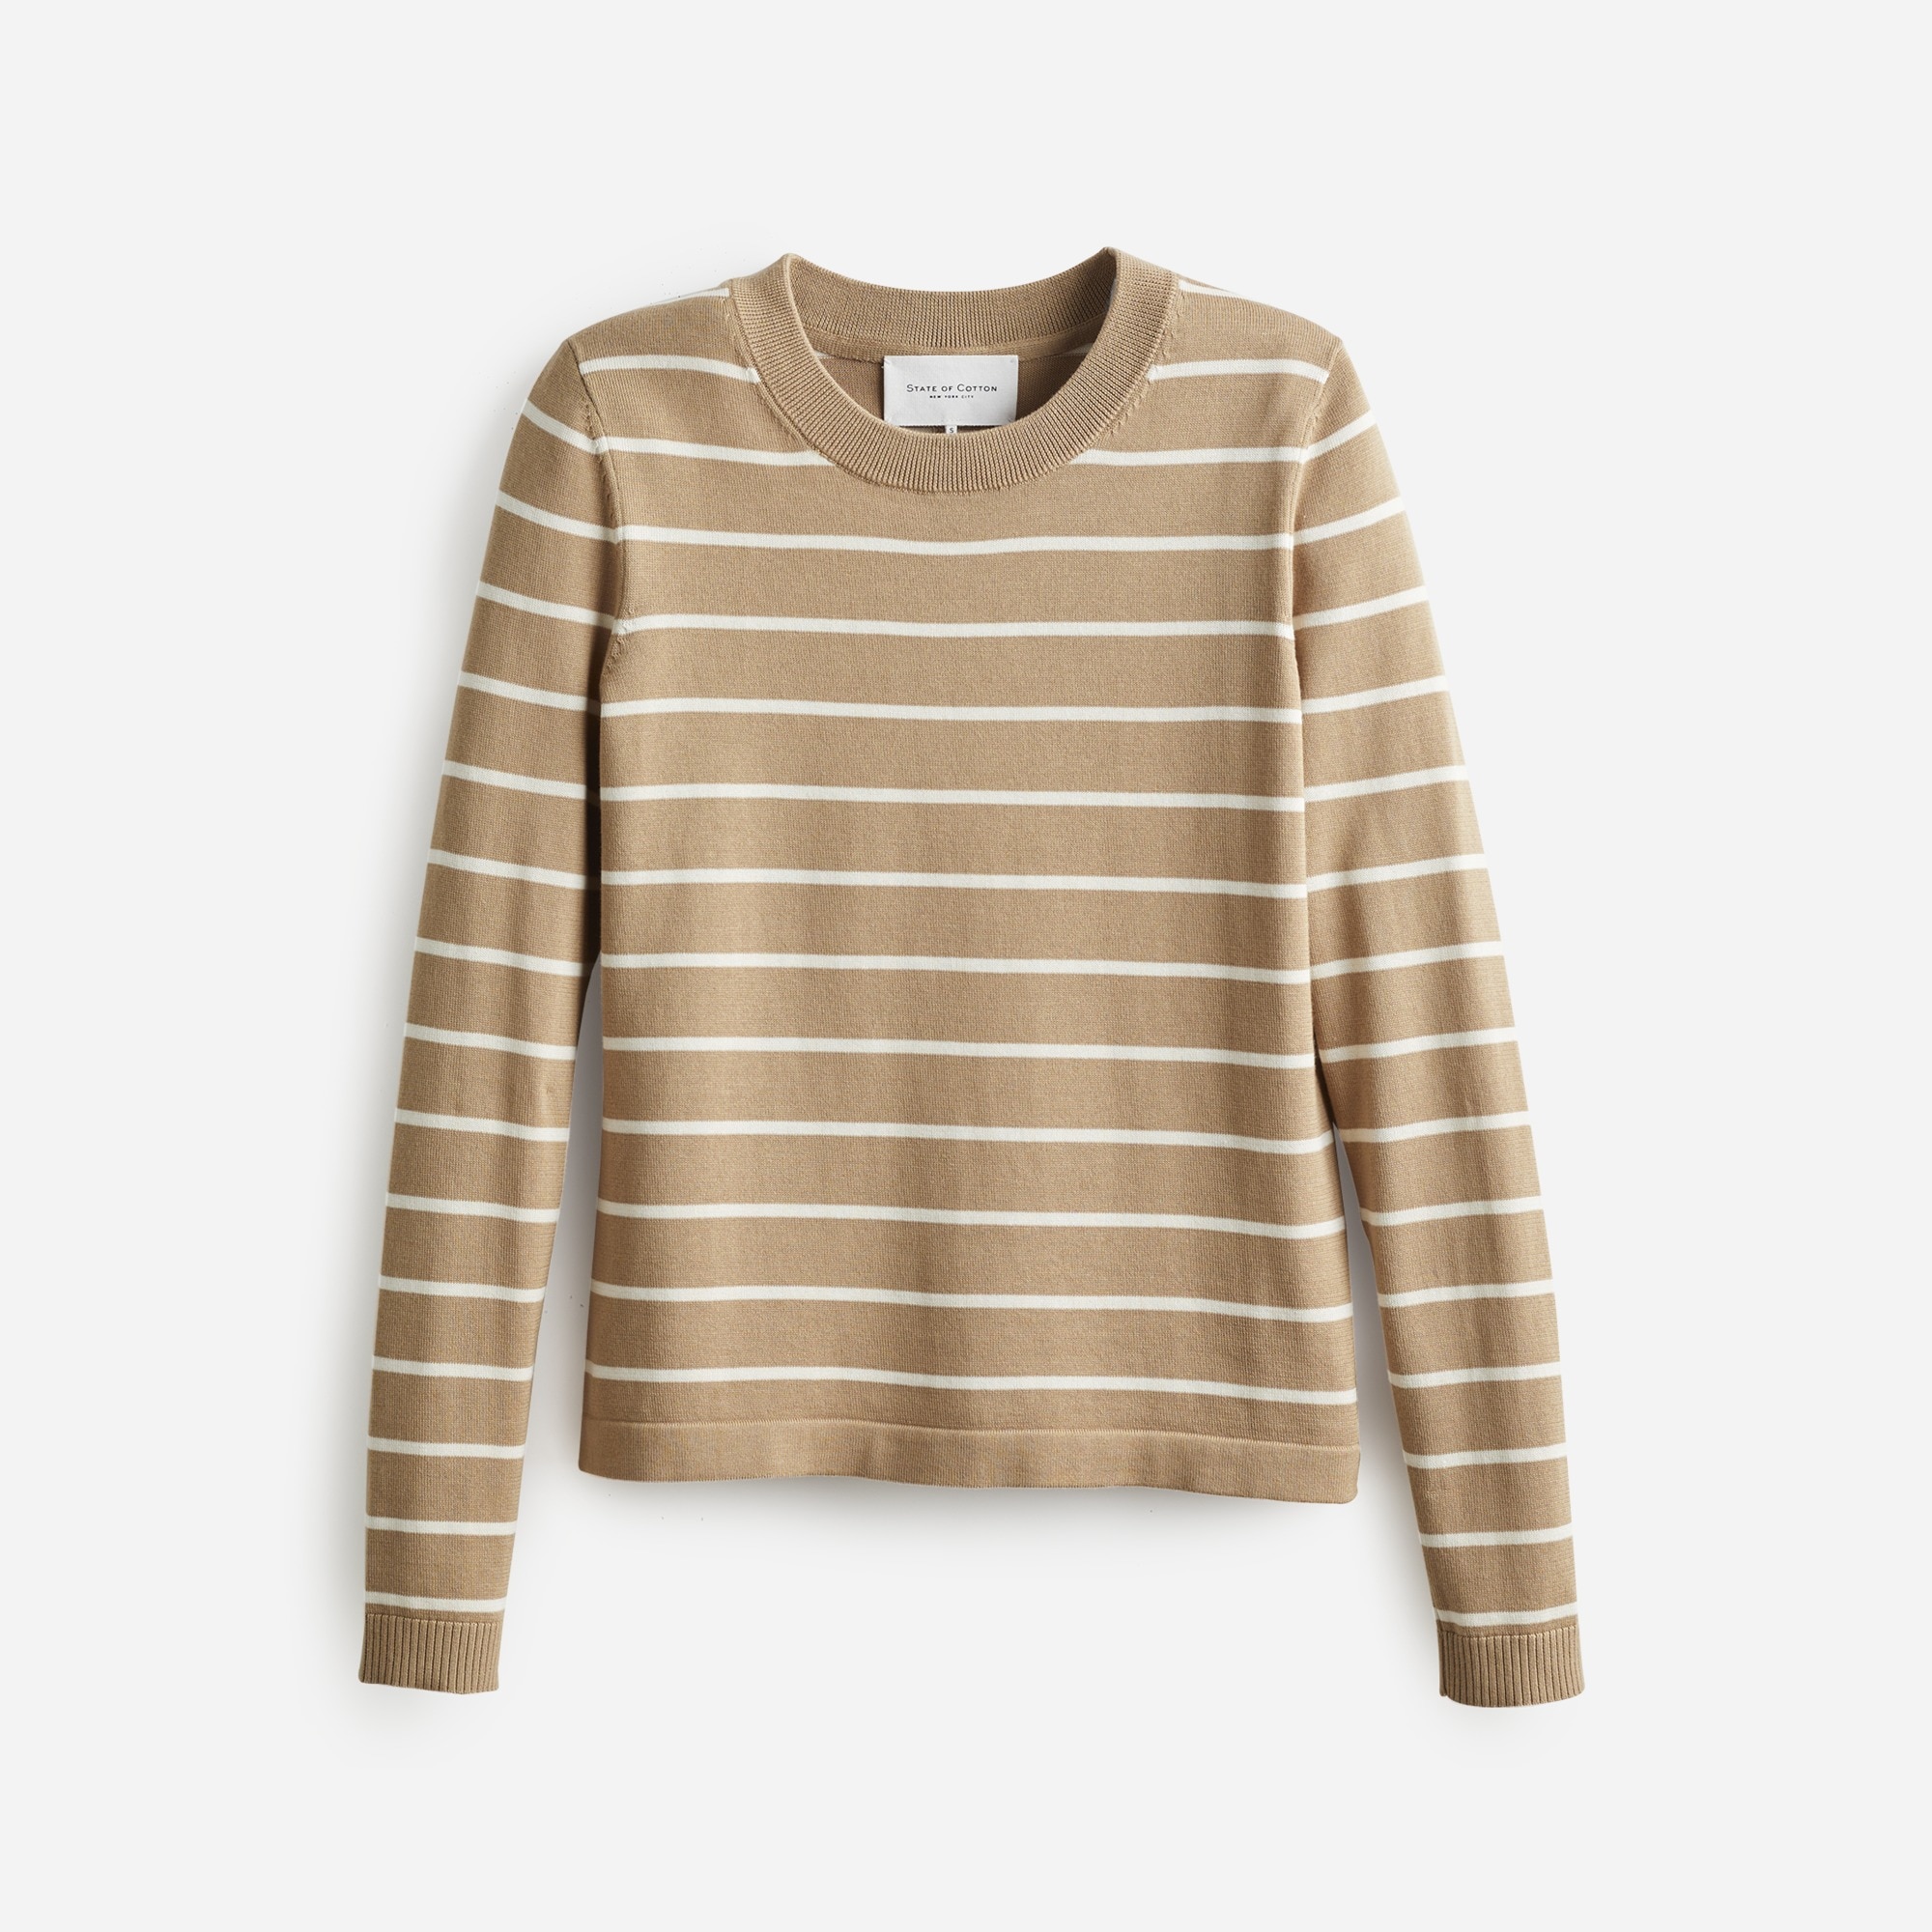 Jcrew State of Cotton NYC Devon striped crewneck sweater